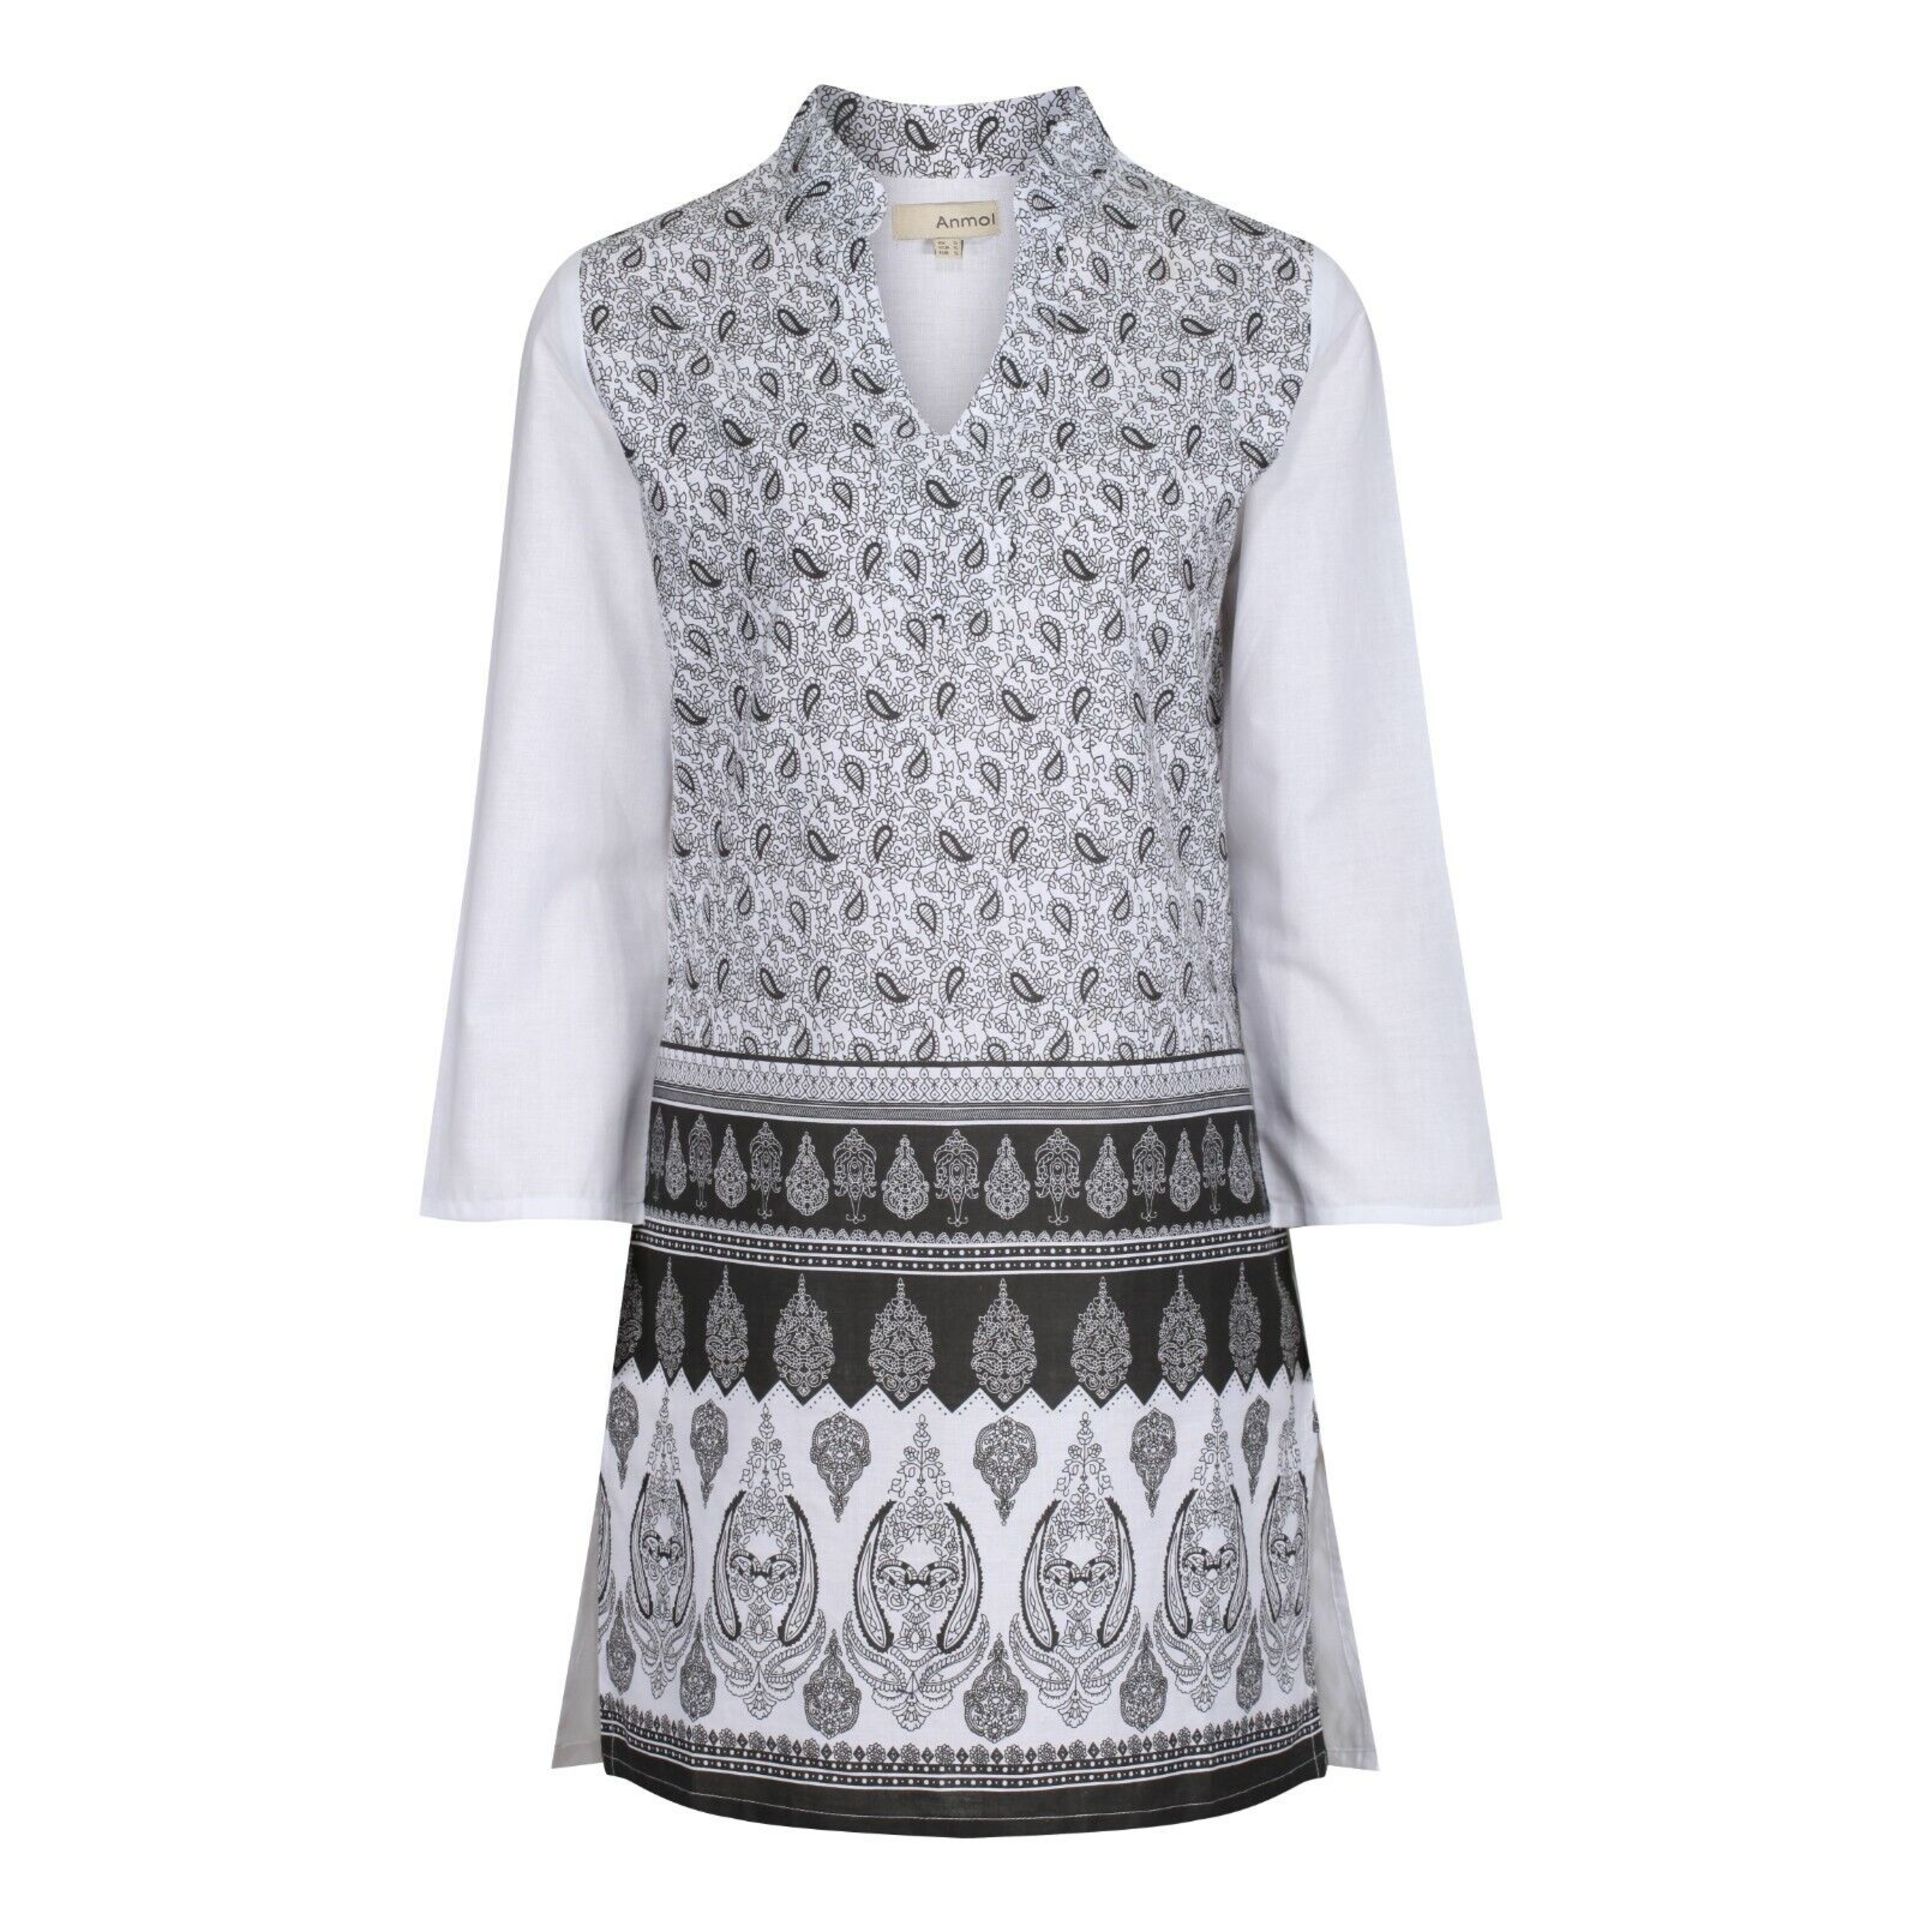 50 x New Women's Cotton Kaftan Tunics Summer Ladieswear Clothing Clothes Fashion - Image 3 of 7